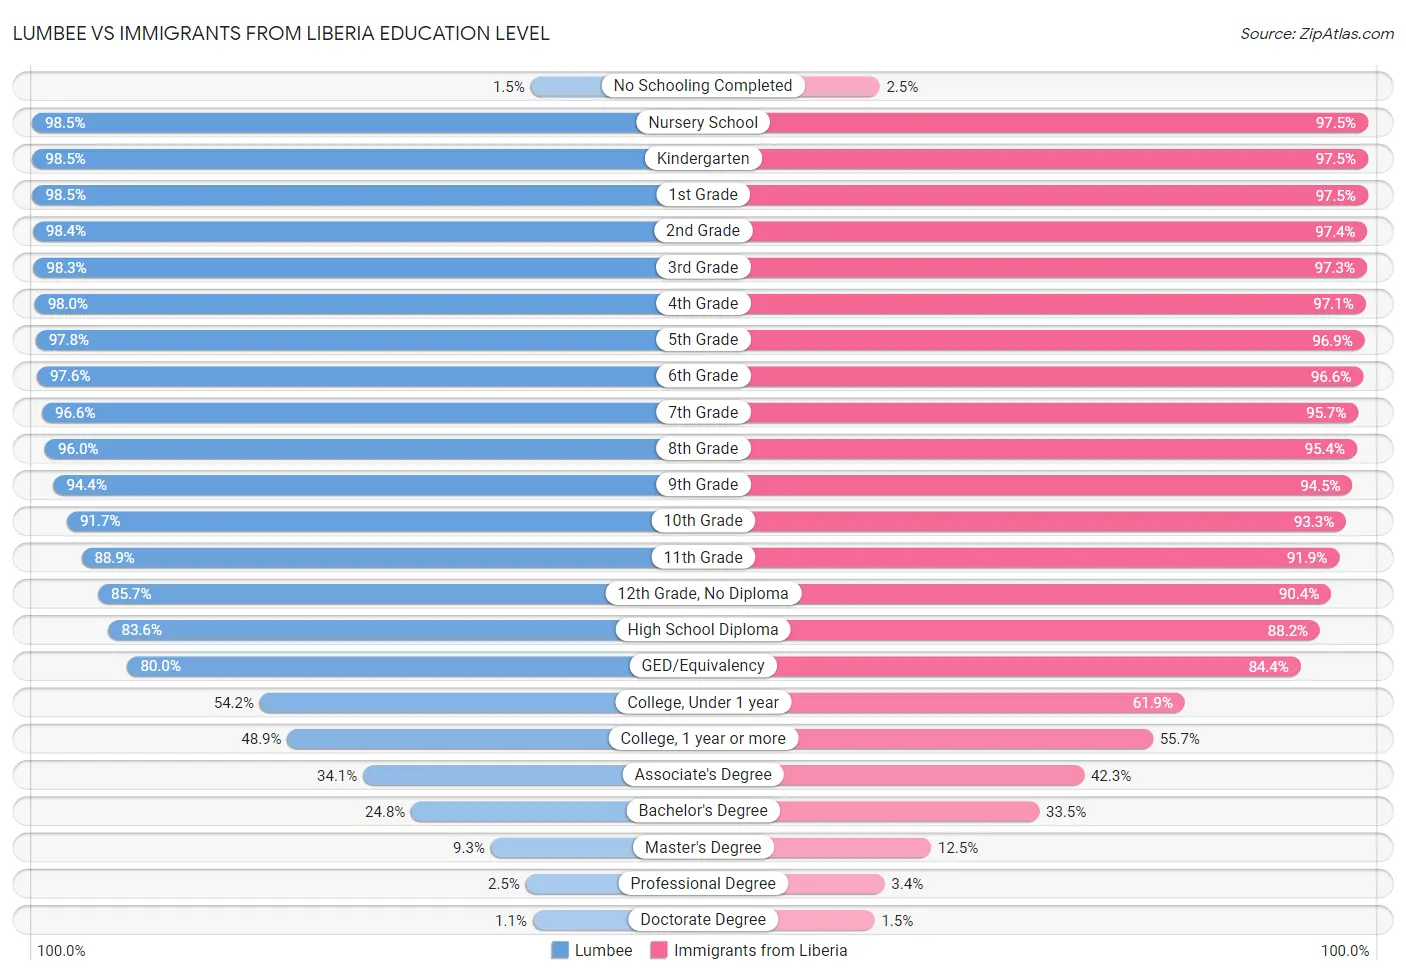 Lumbee vs Immigrants from Liberia Education Level